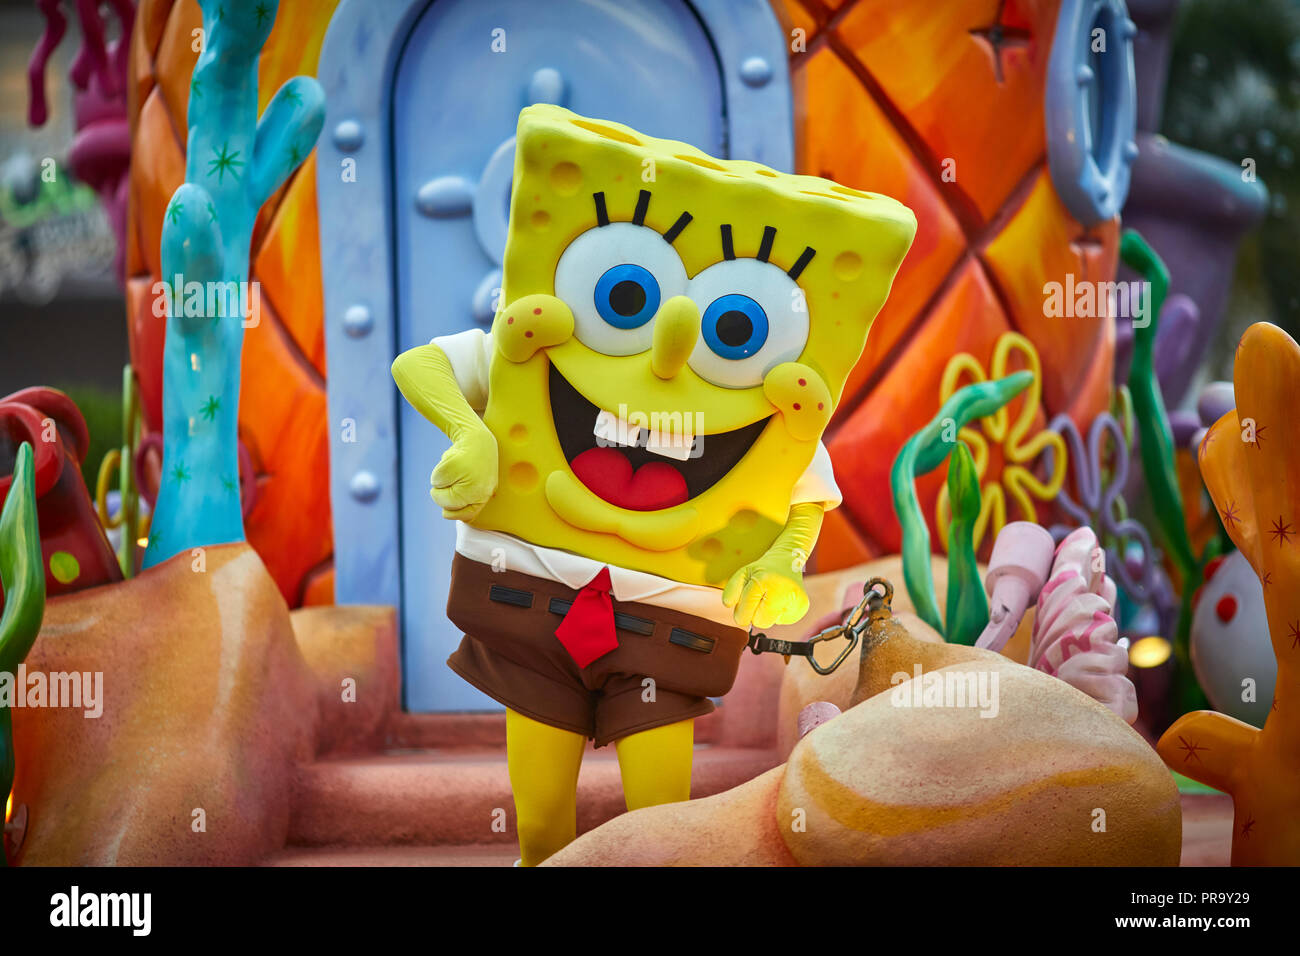 Spongebob orlando hi-res stock photography and images - Alamy